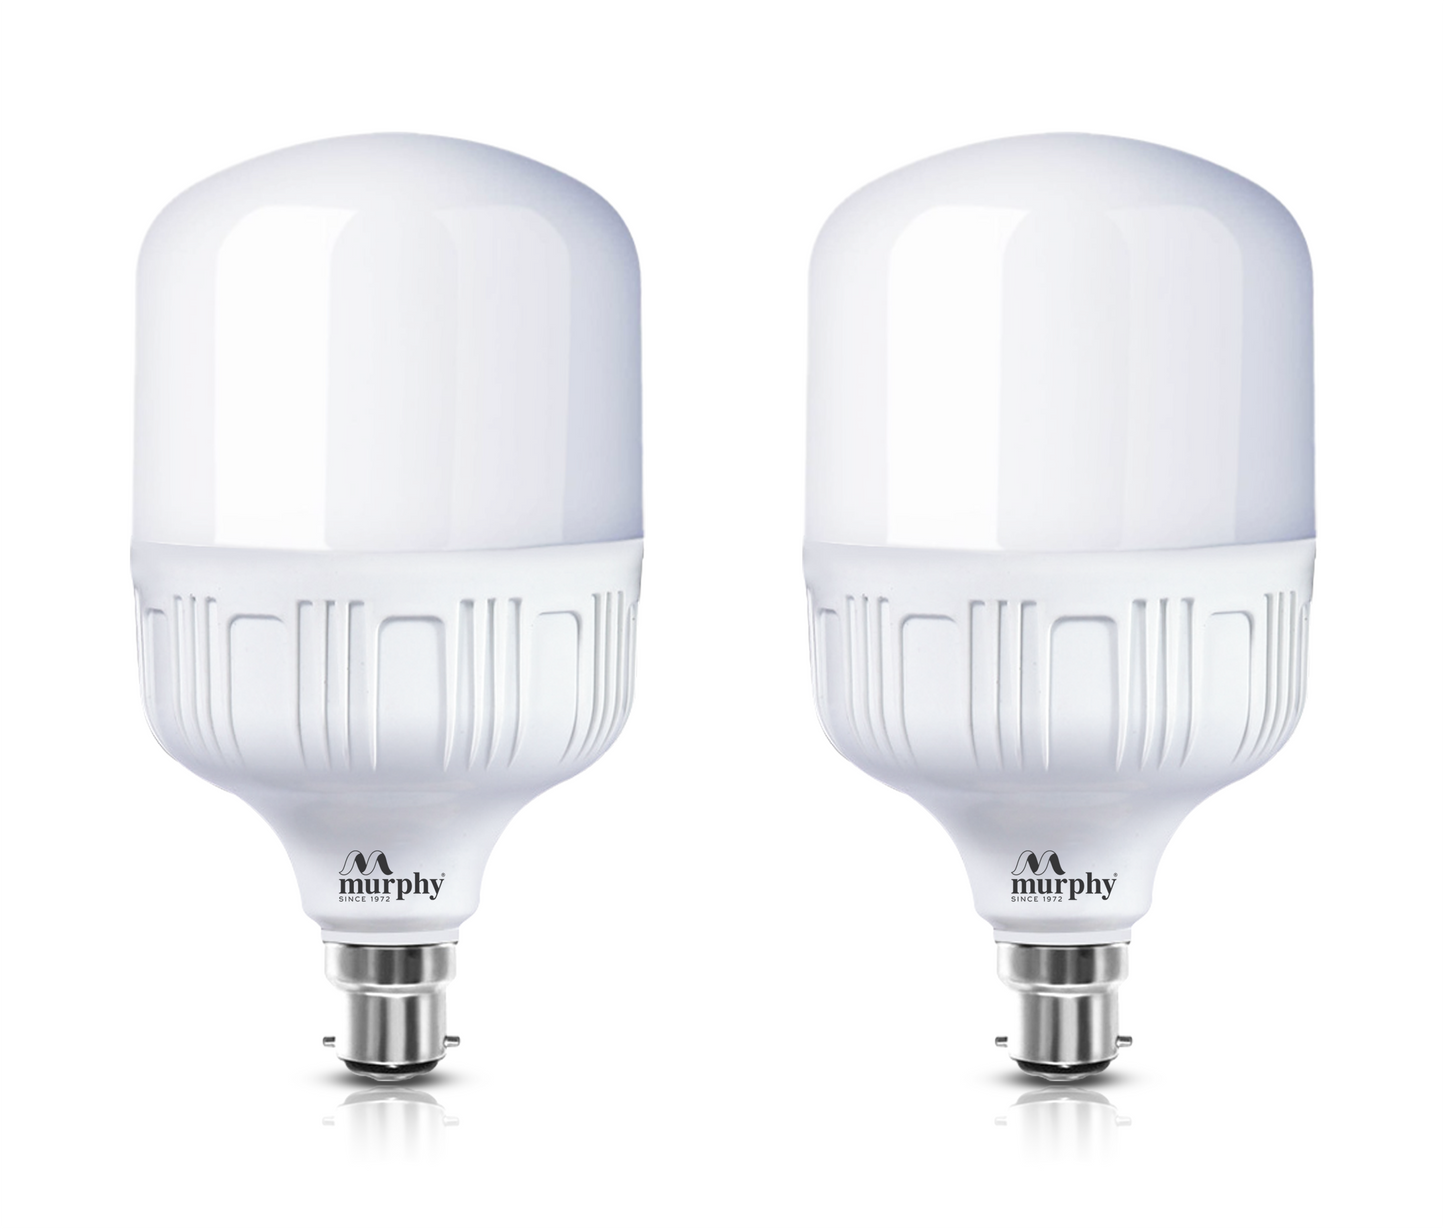 Murphy LED 40W High Wattage Bulb